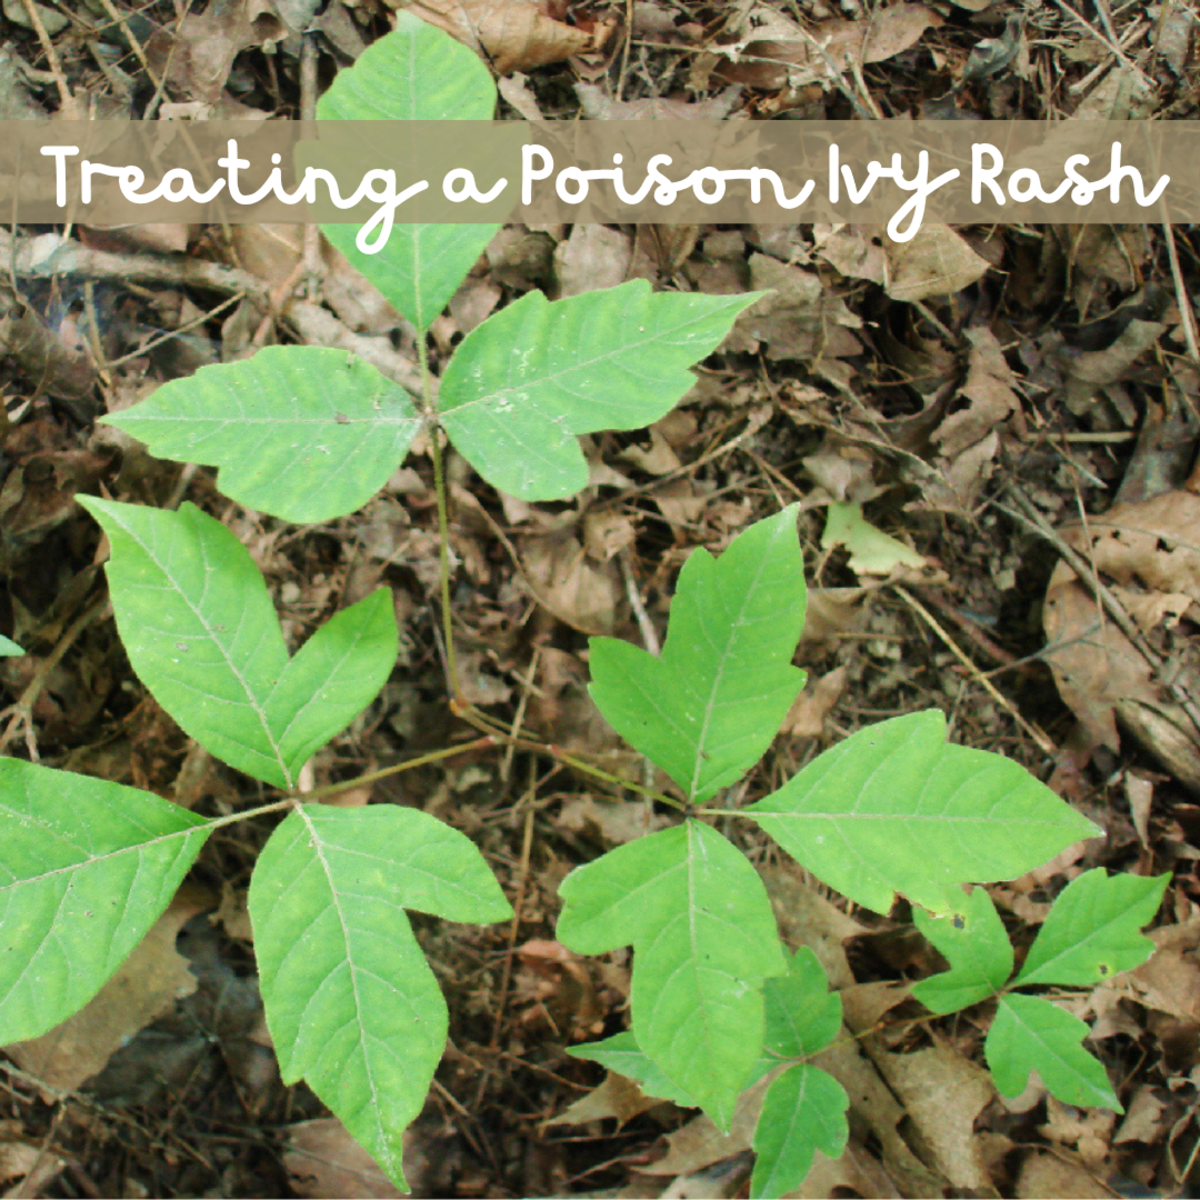 How should you handle a poison ivy rash?